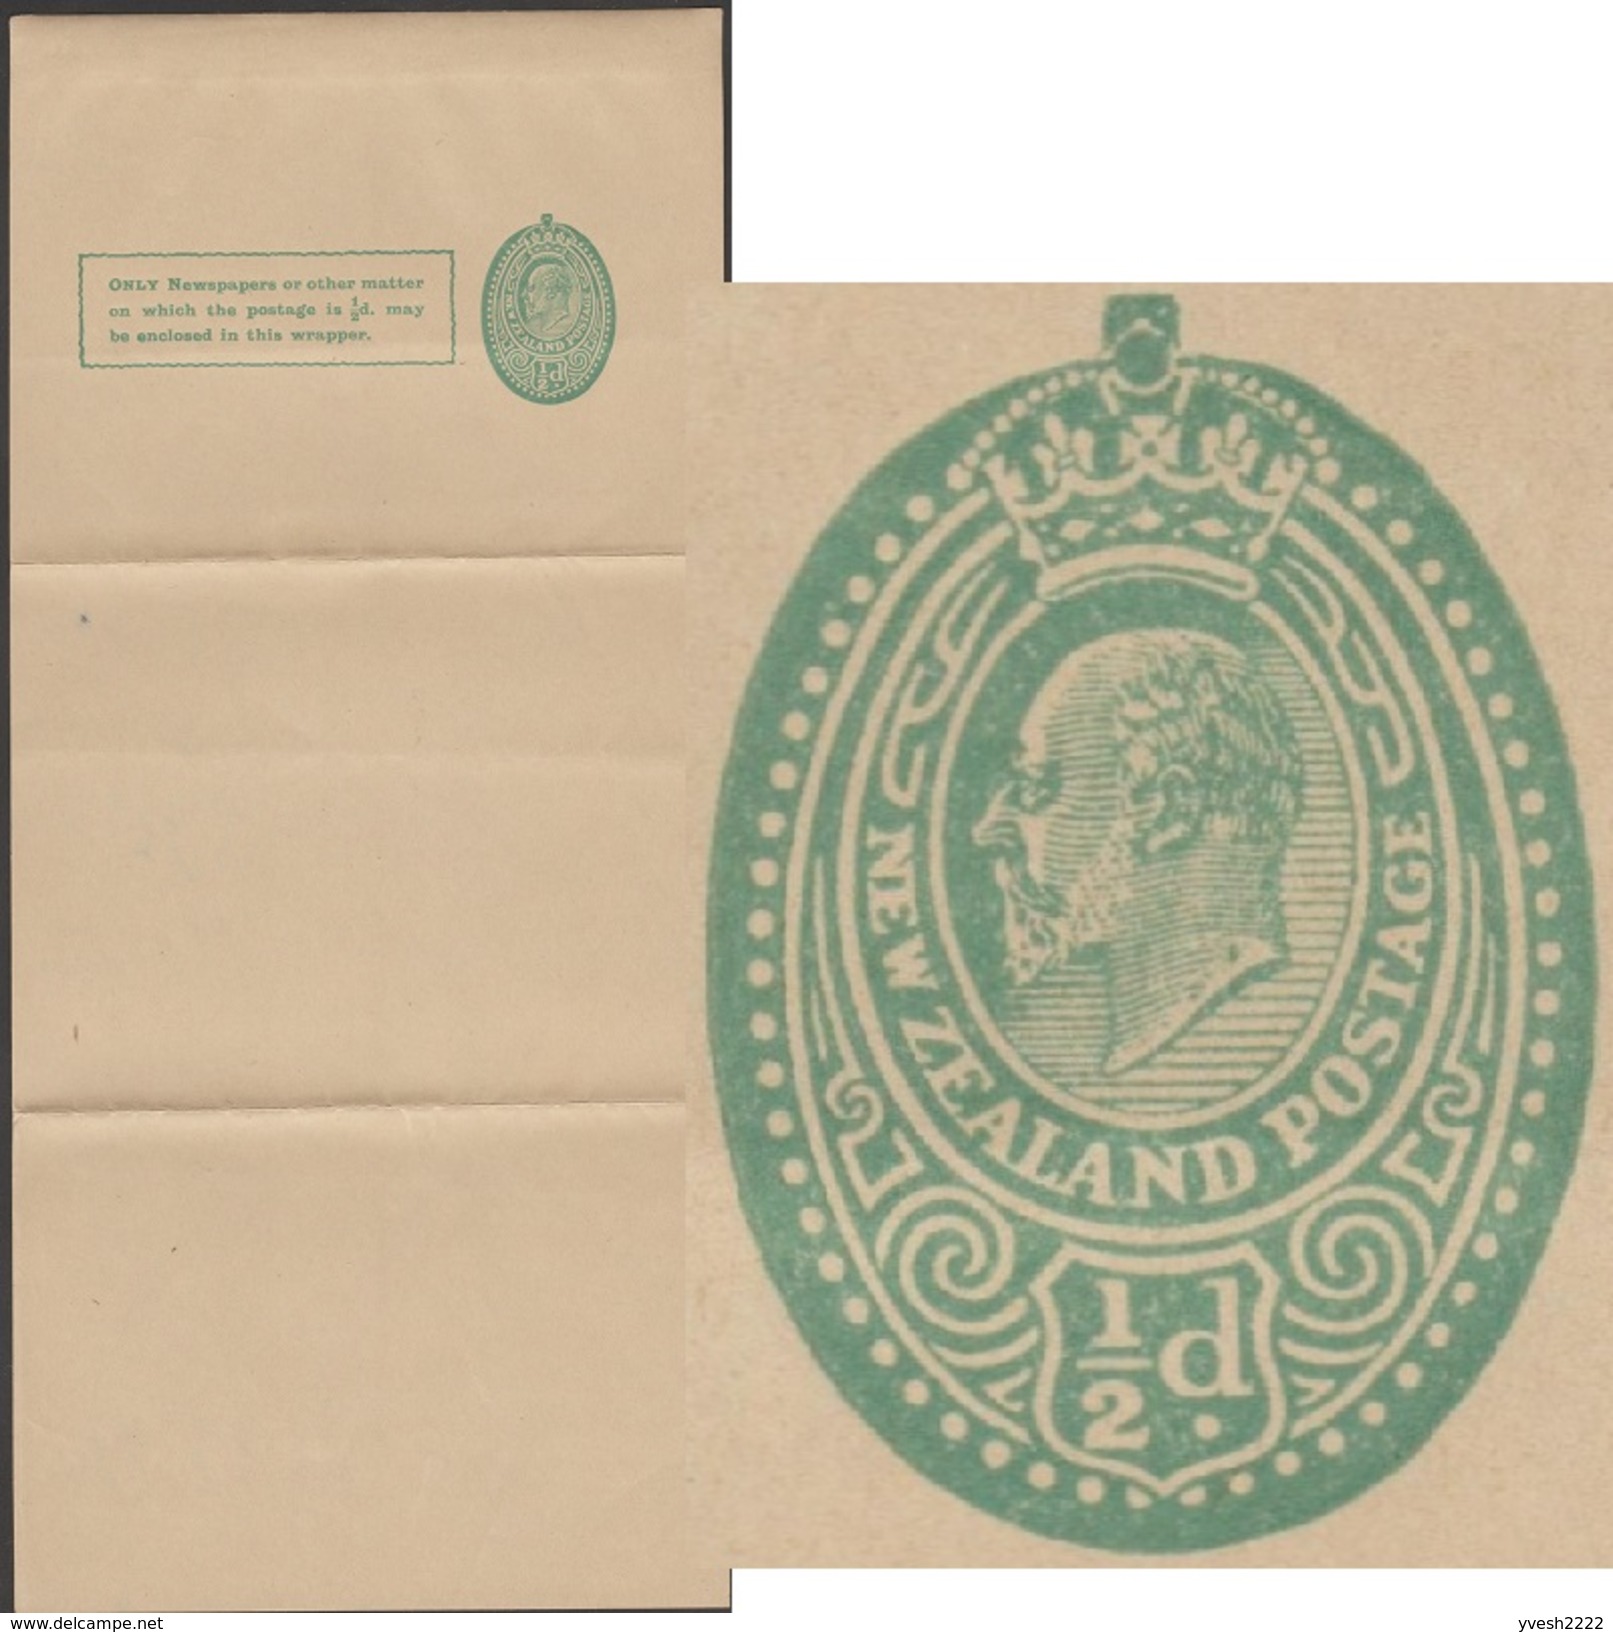 Nouvelle-Zélande Vers 1908. Entier Postal, Bande-journal Édouard VII » (Edward VII). Fraîcheur Exceptionnelle - Postal Stationery